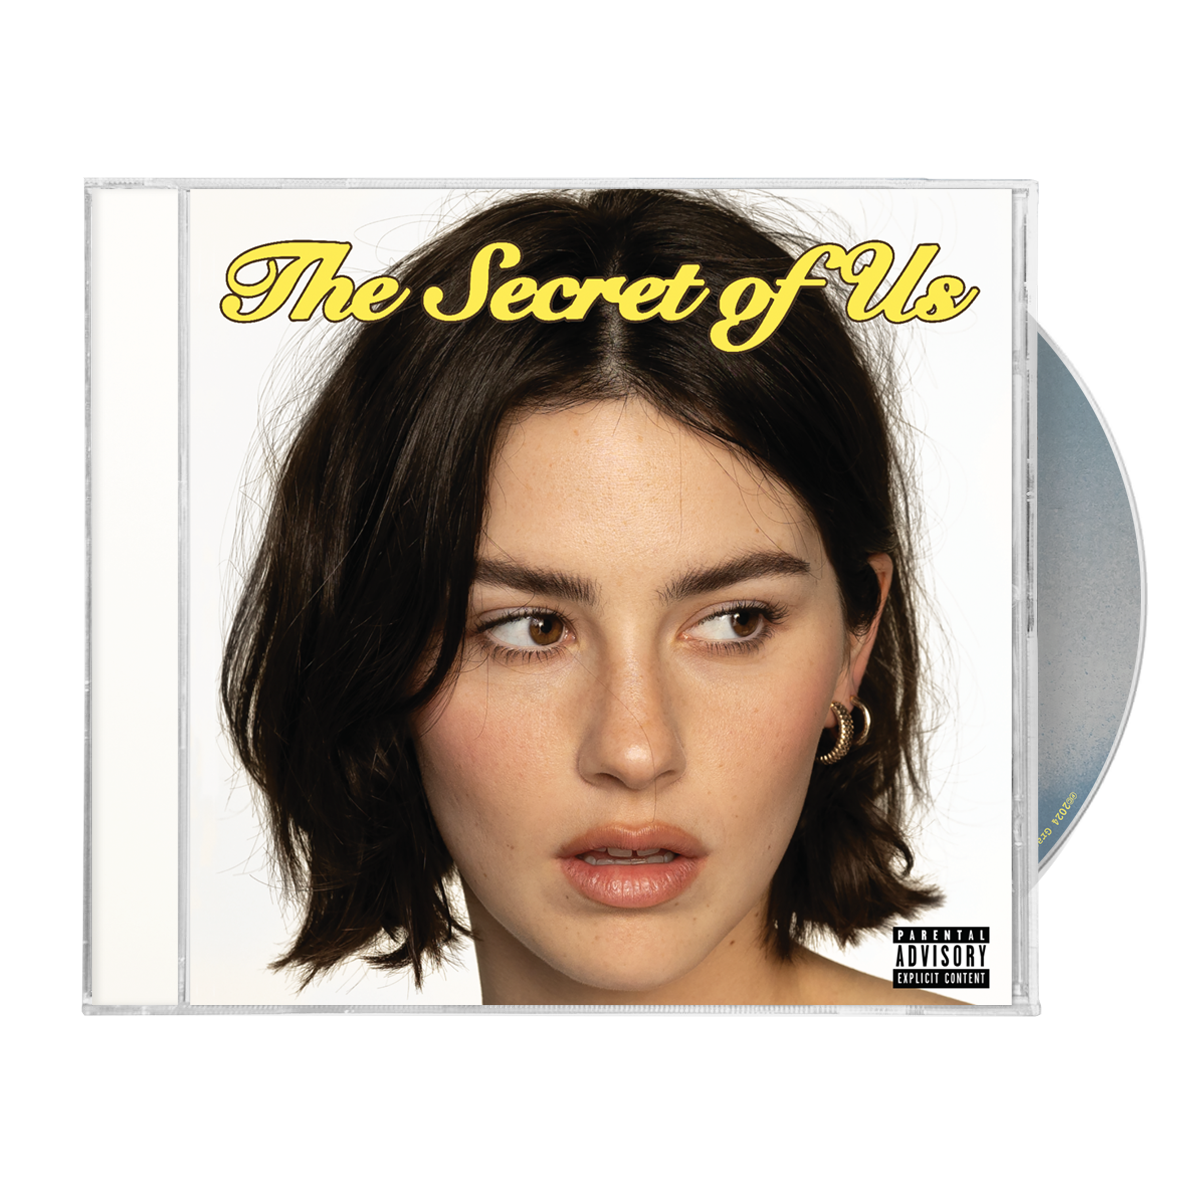 The Secret of Us Vinyl, Exclusive Vinyl, CD + Signed Art Card